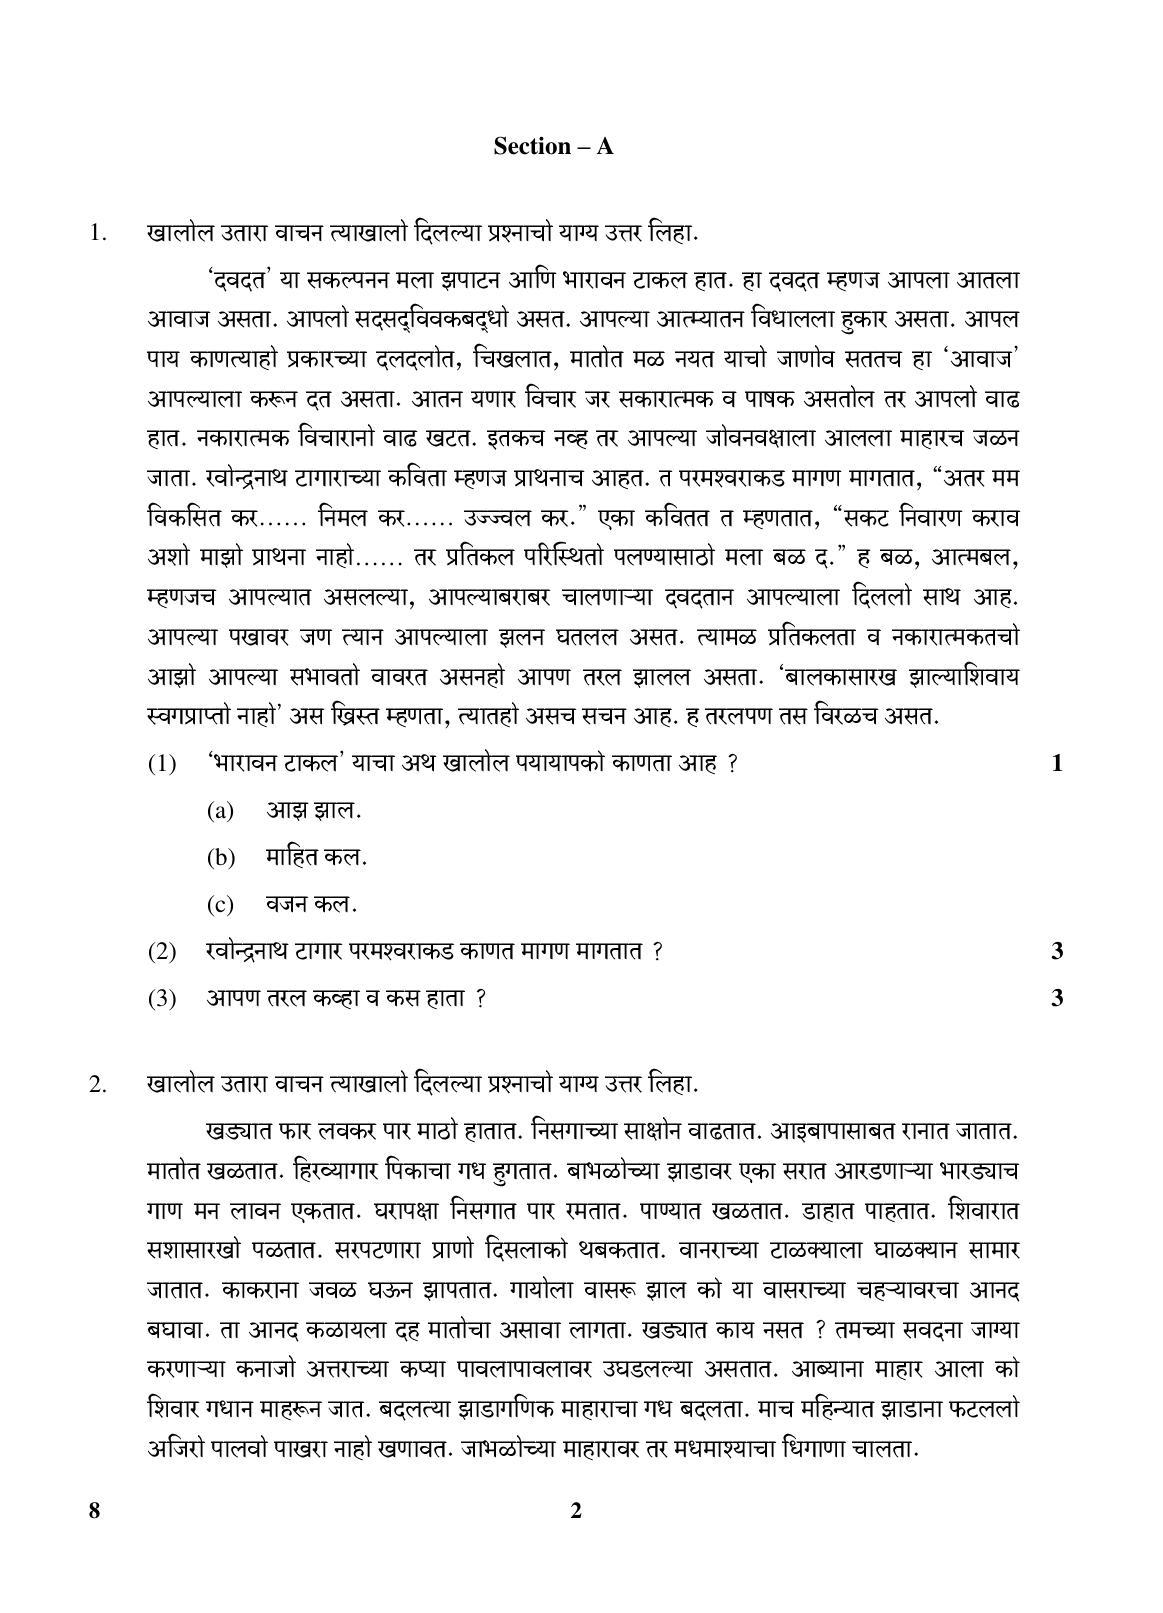 CBSE Class 10 8 (Marathi) 2018 Question Paper - Page 2